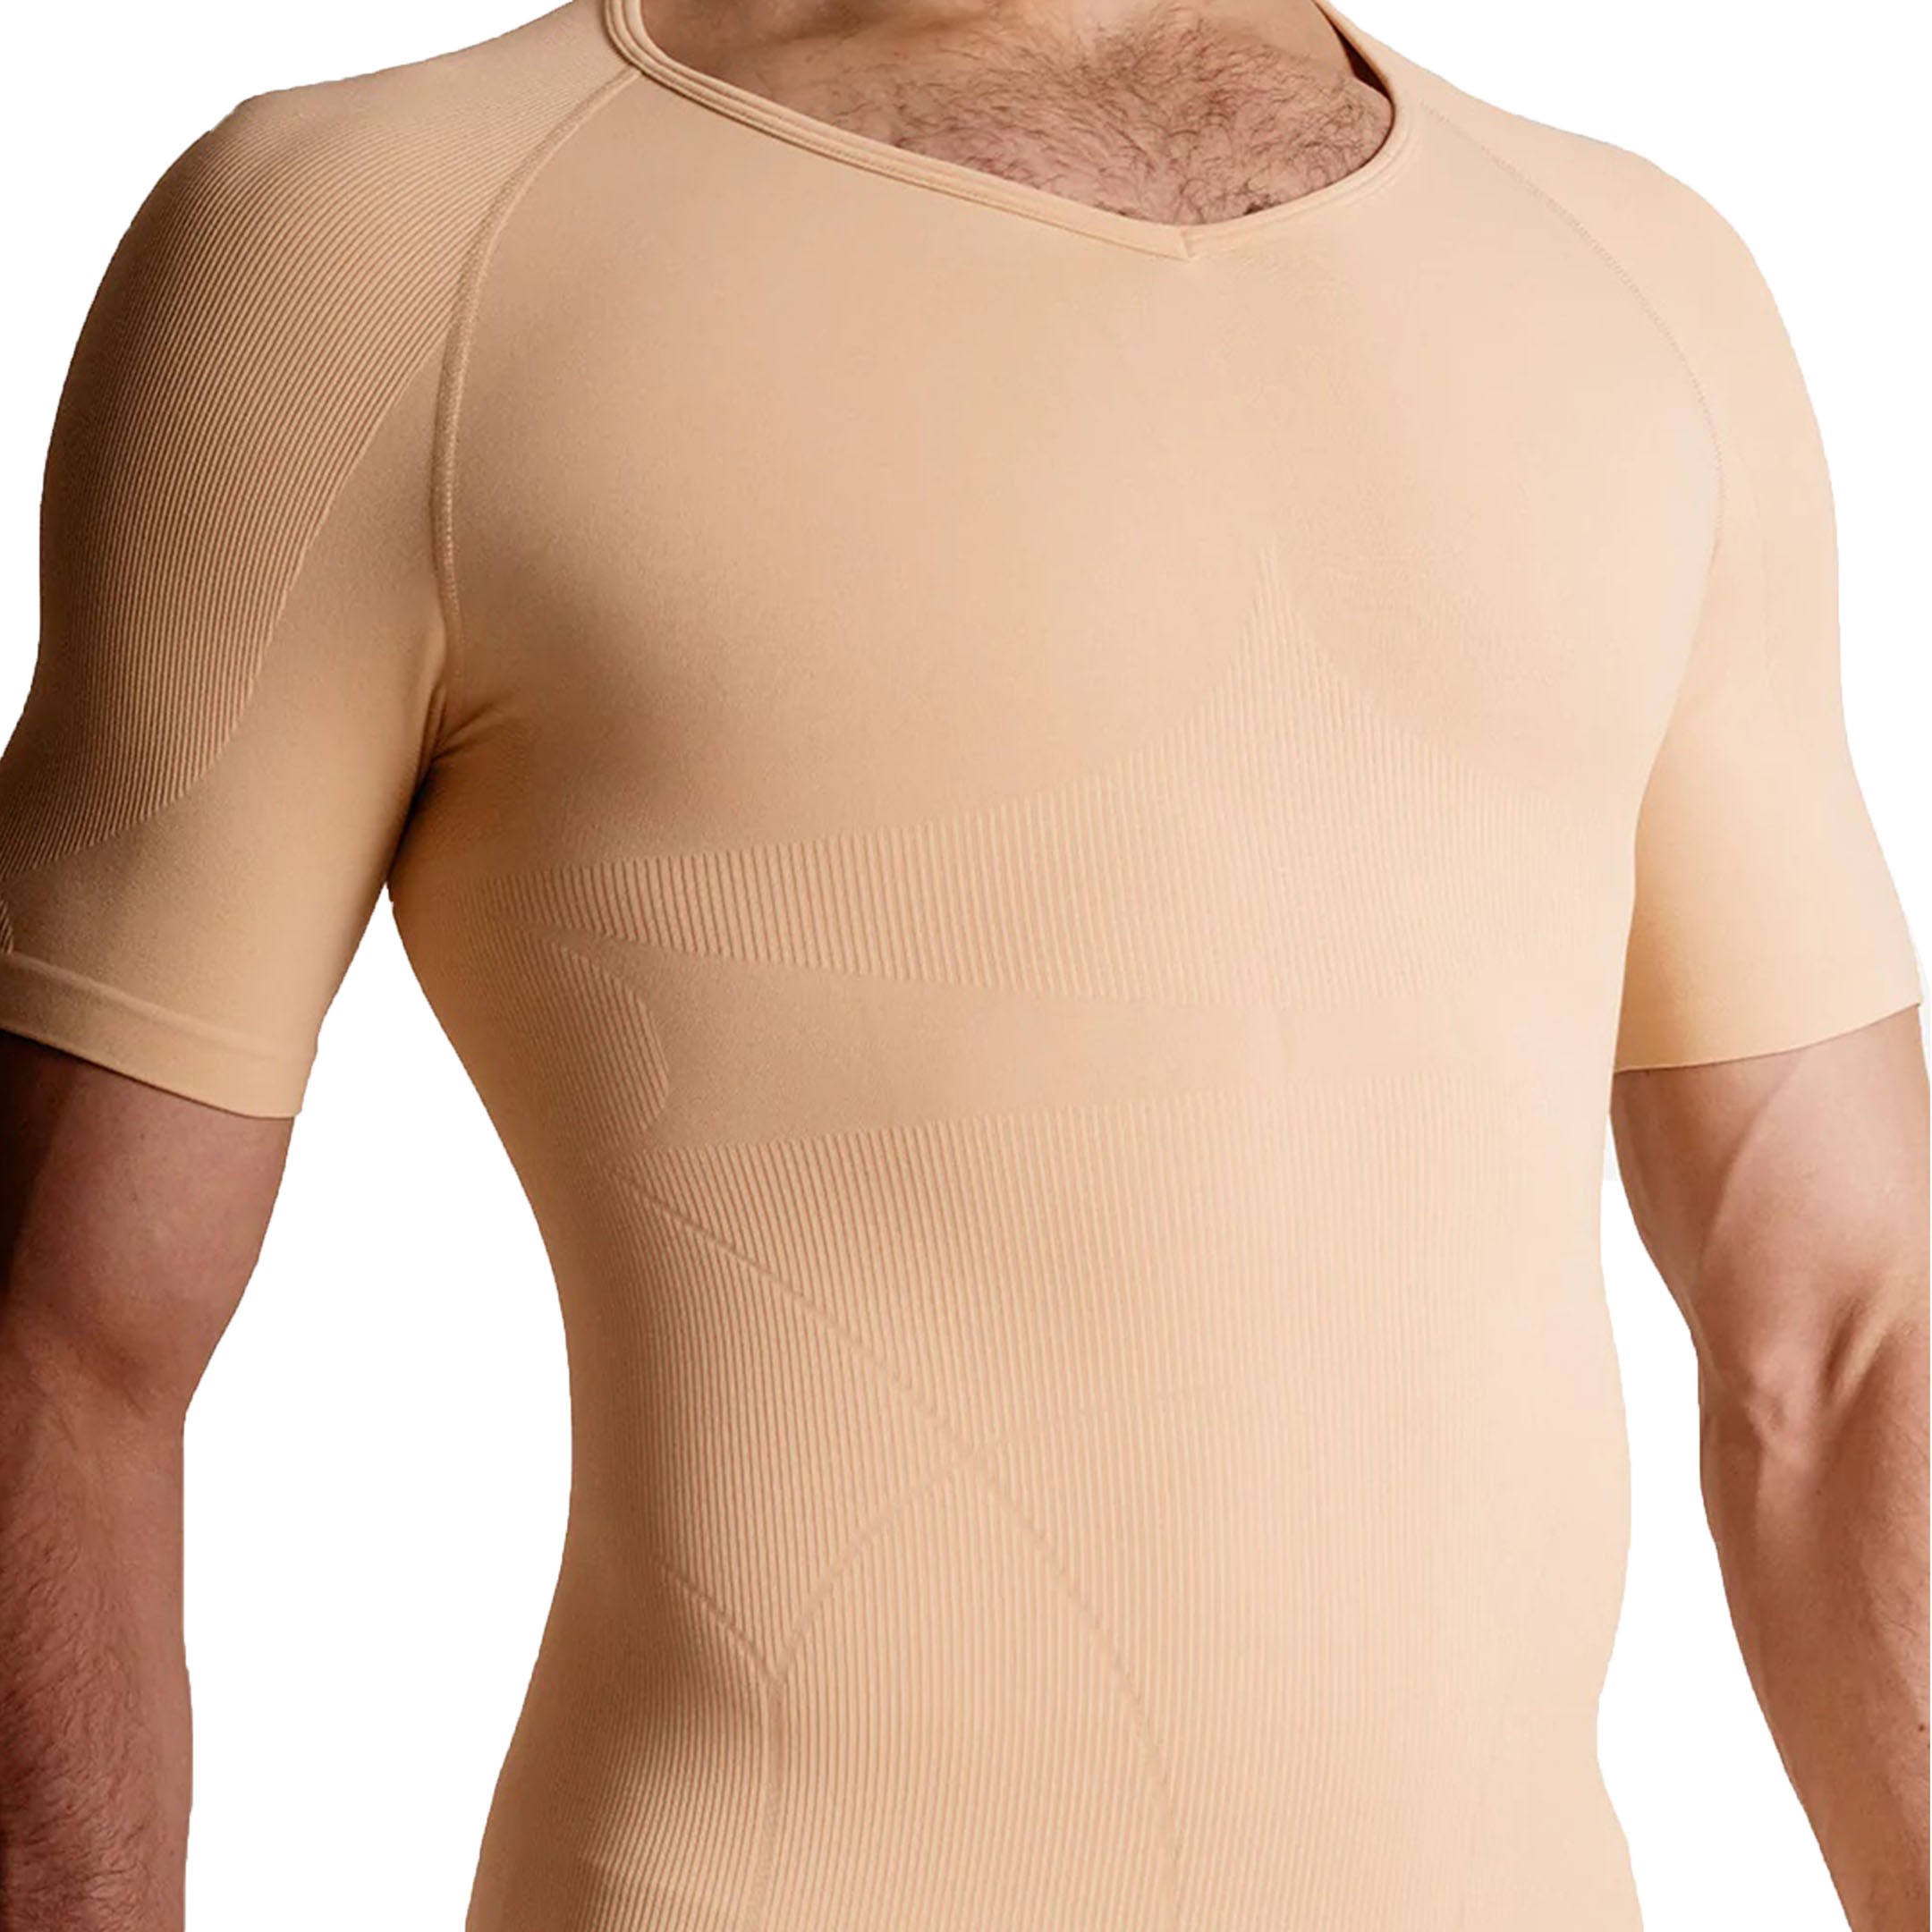 Fashion Men's Short Sleeves T-shirts V neck Tight Skin Compression